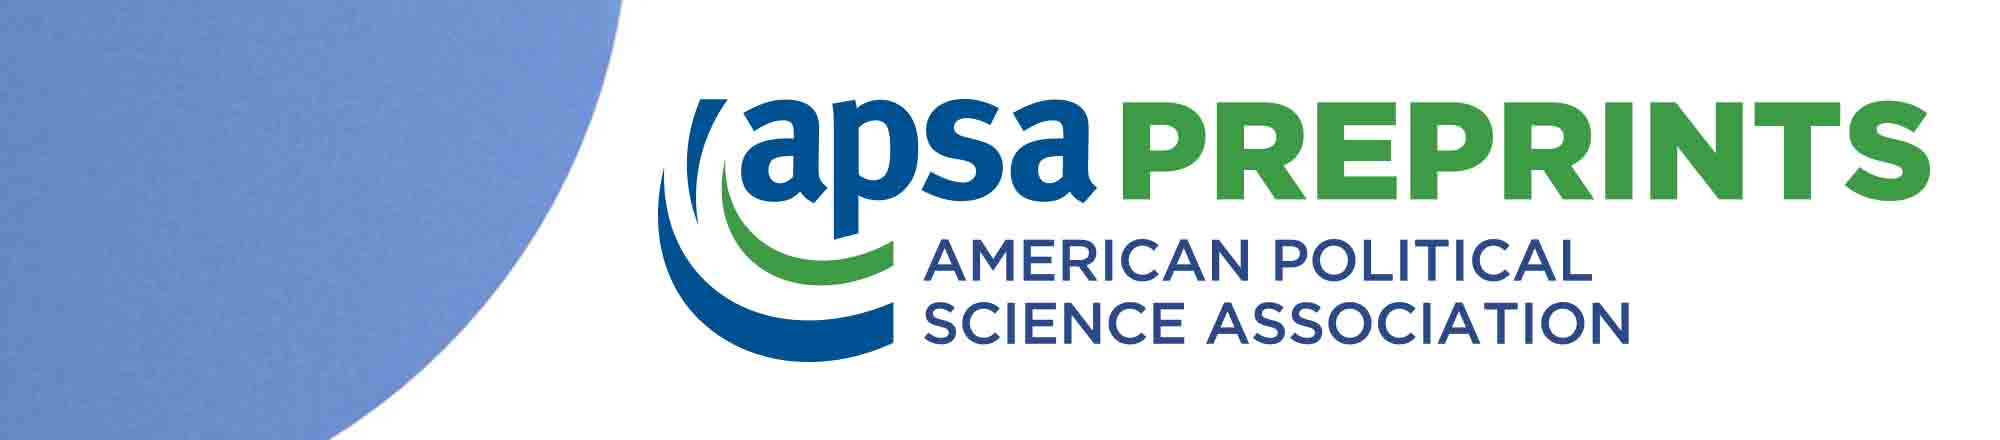 APSA-Preprints-Hero-banner-3